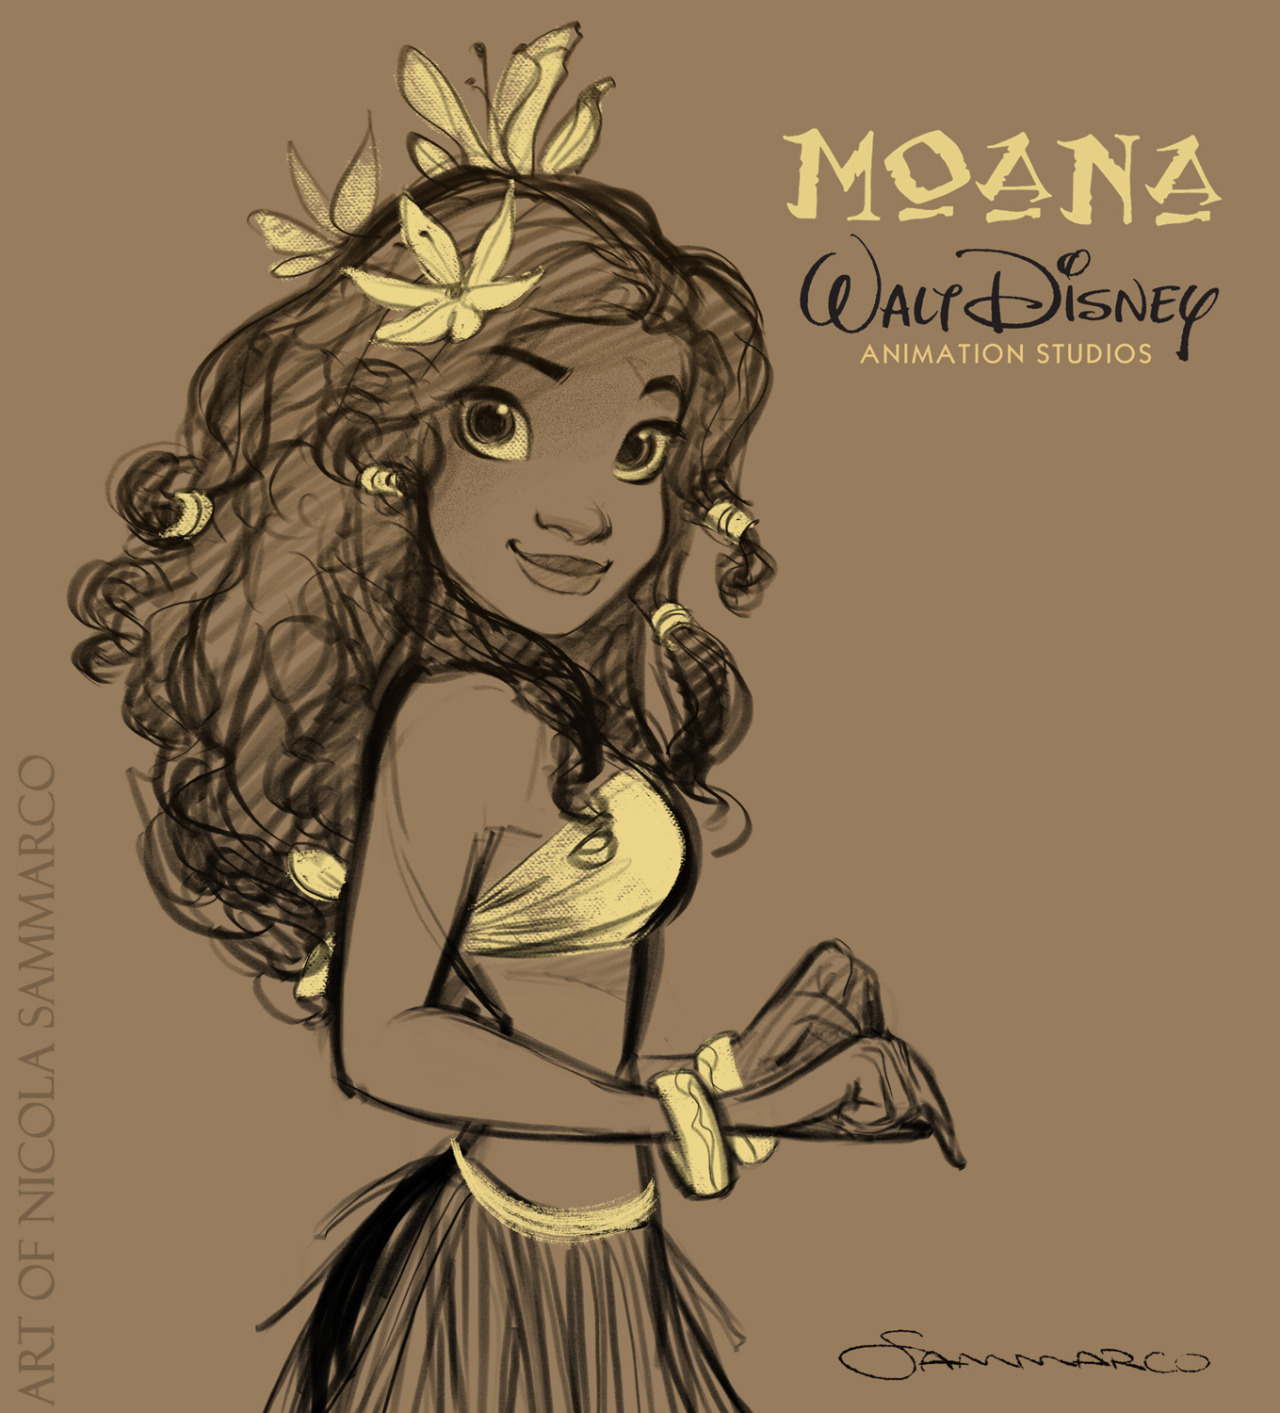 Fanart of the already-popular Polynesian princess (by Nicola Sammarco)